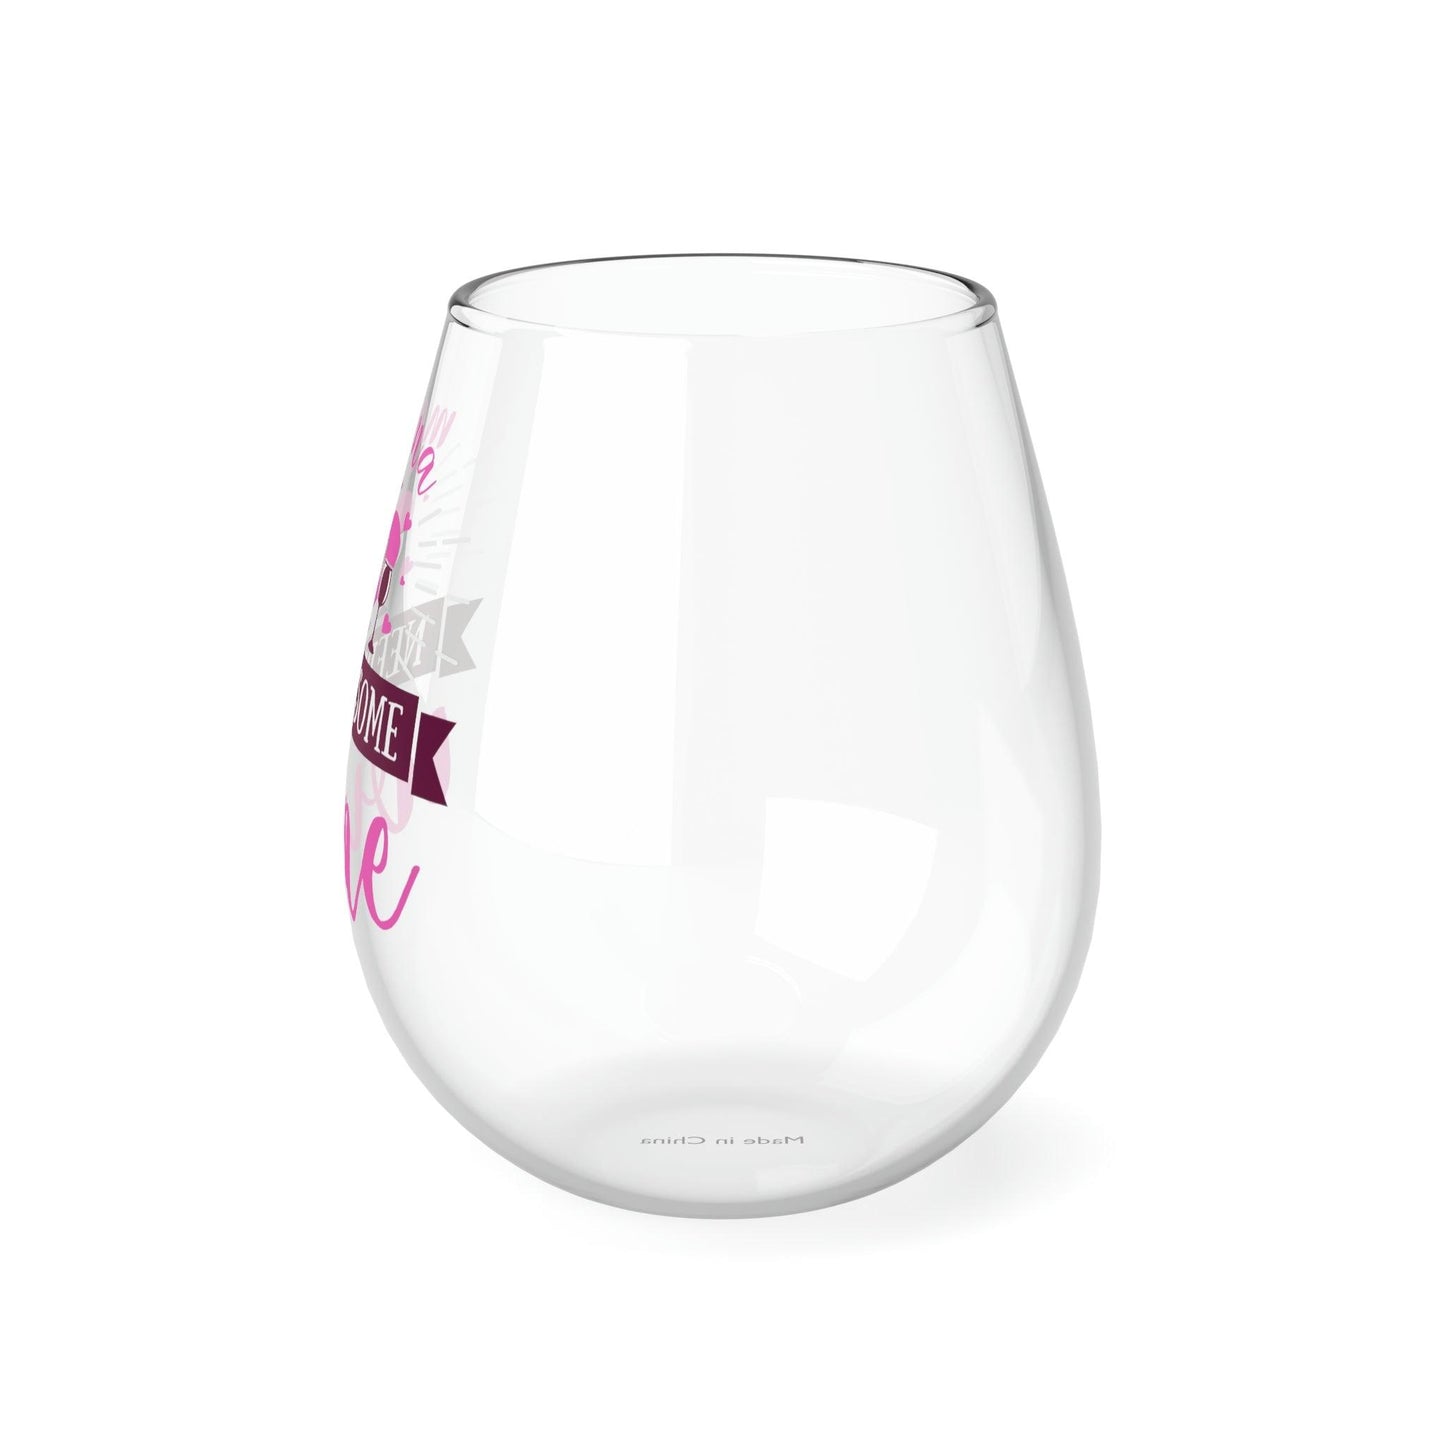 Gift for Mom Mom wine glass Mama Needs Some Wine Glass - Mother's Day Wine glass - Giftsmojo